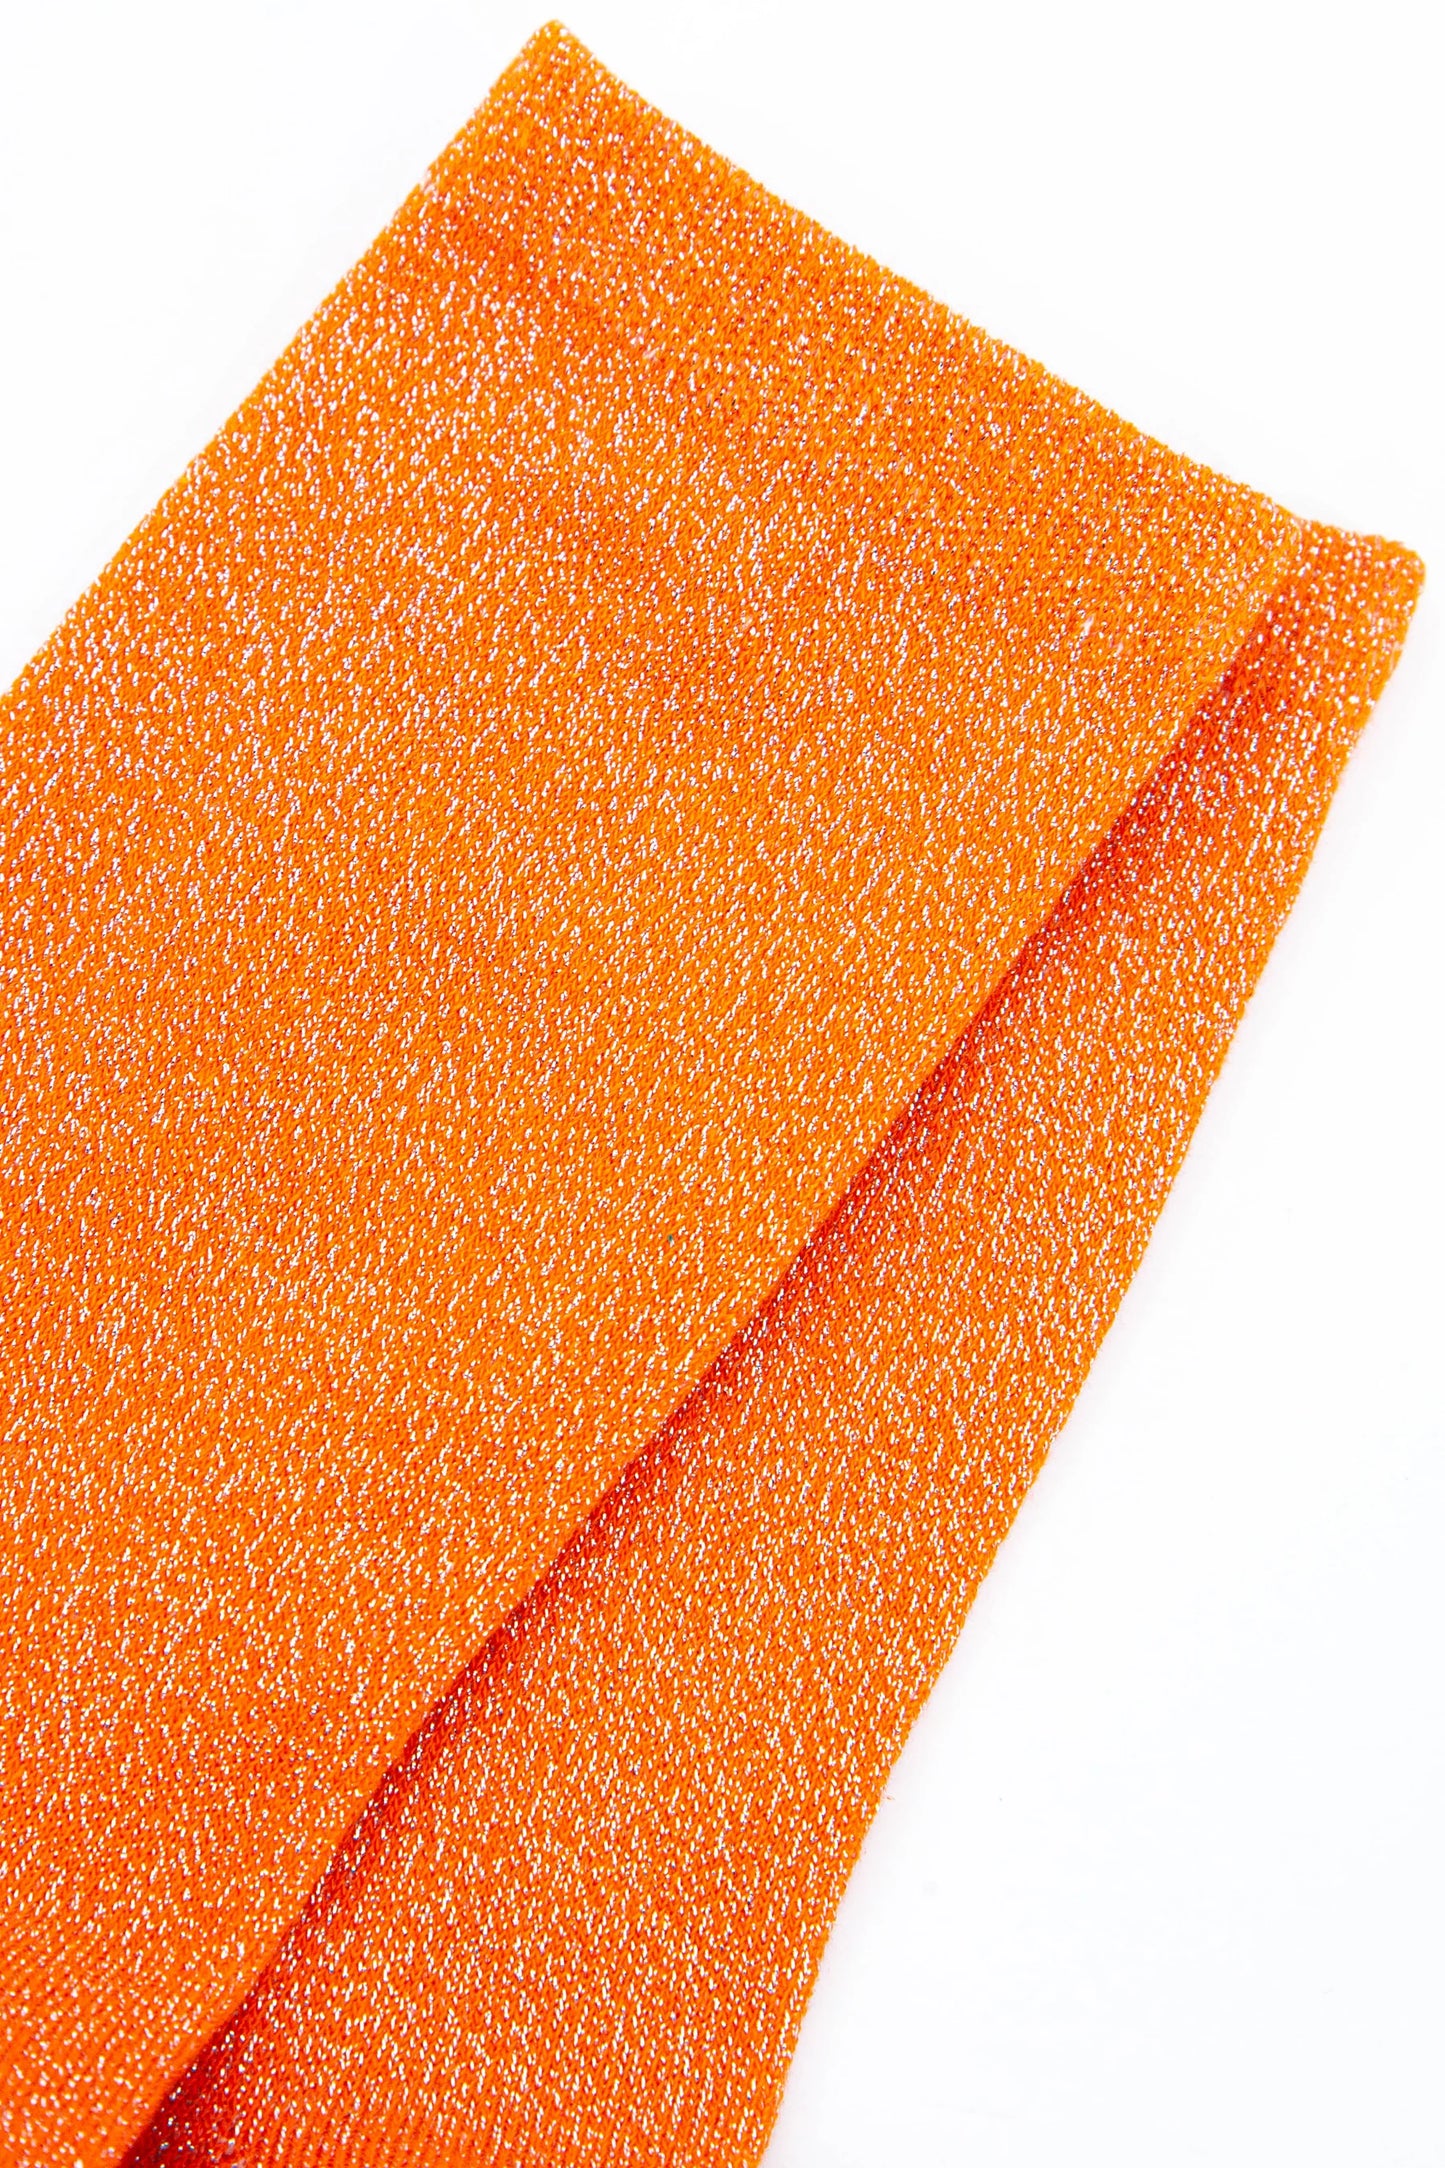 Glitter Socks - Orange